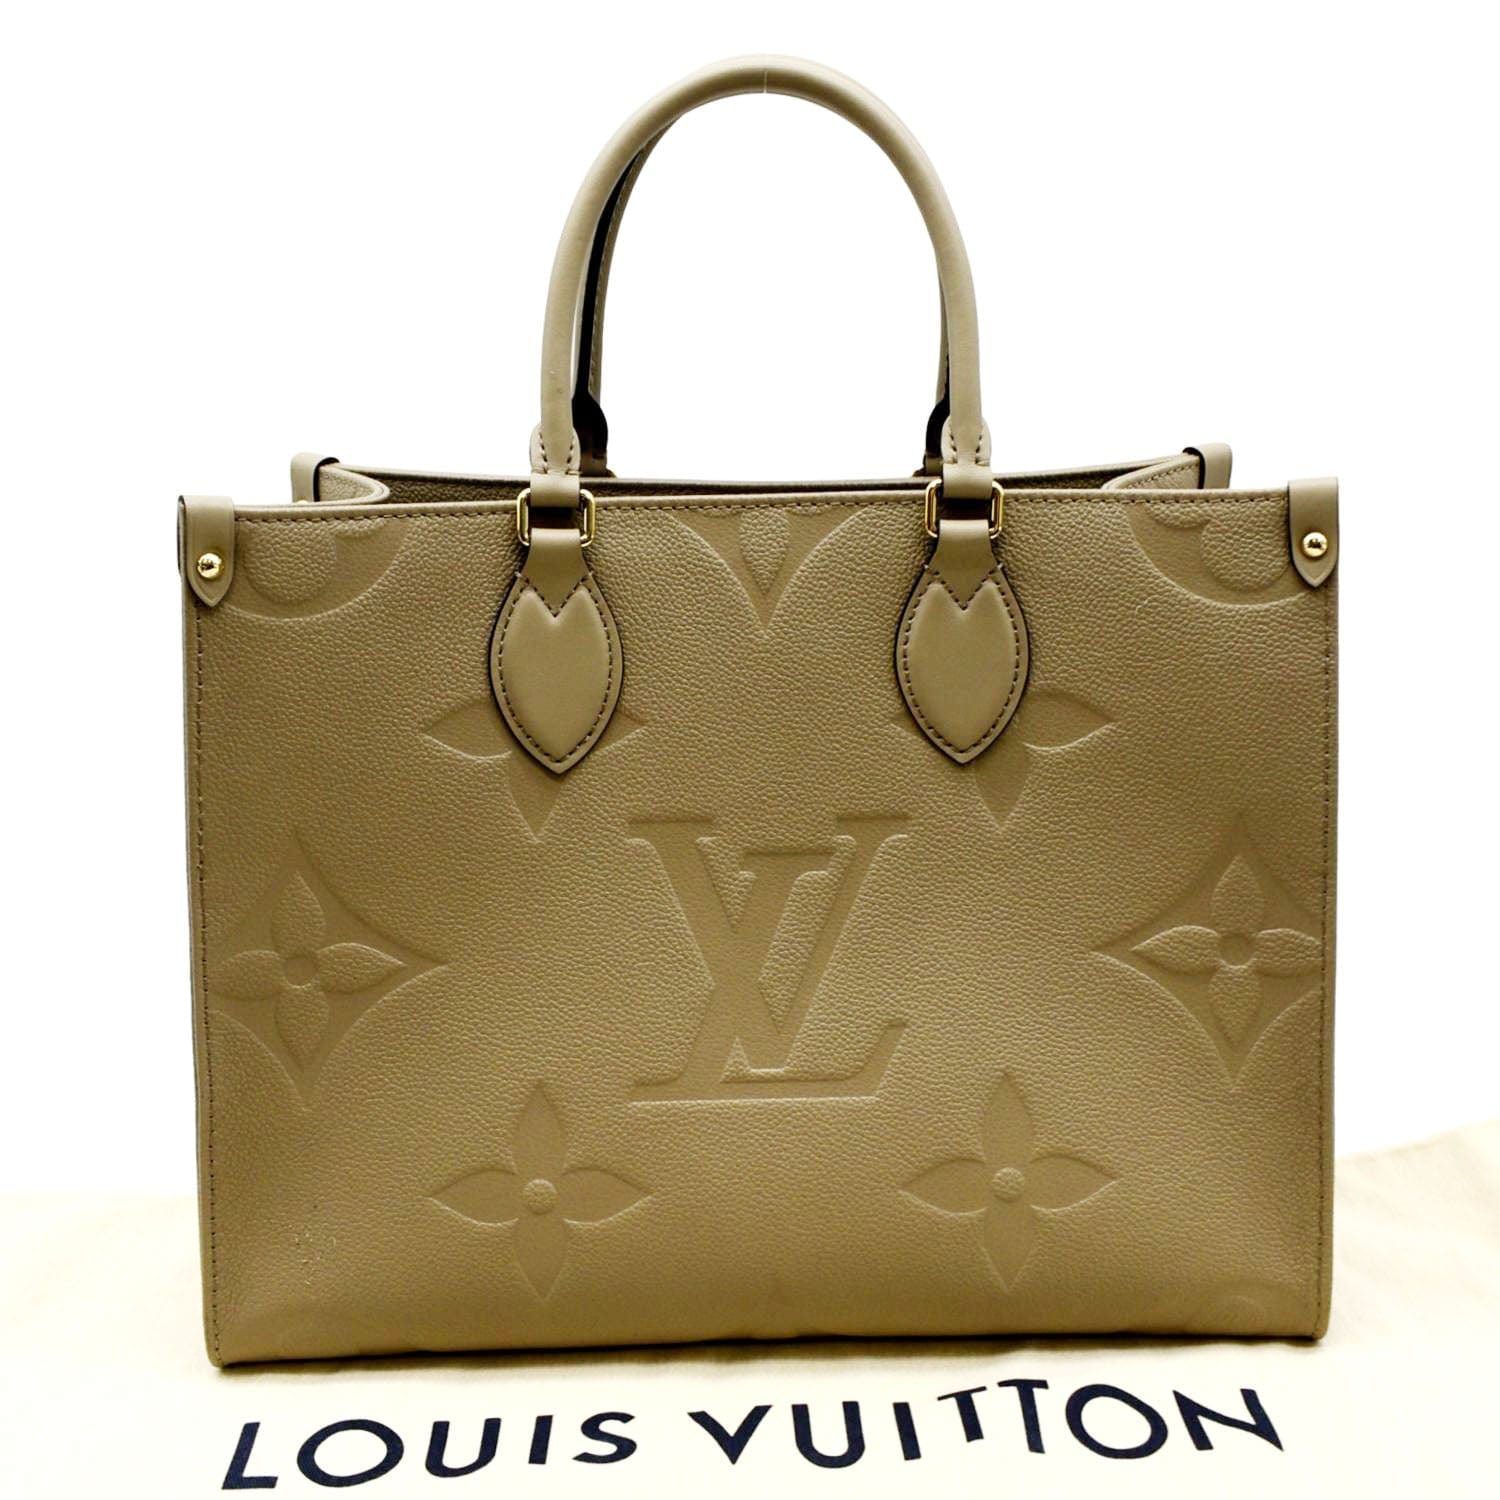 RETAIL bei Louis Vuitton